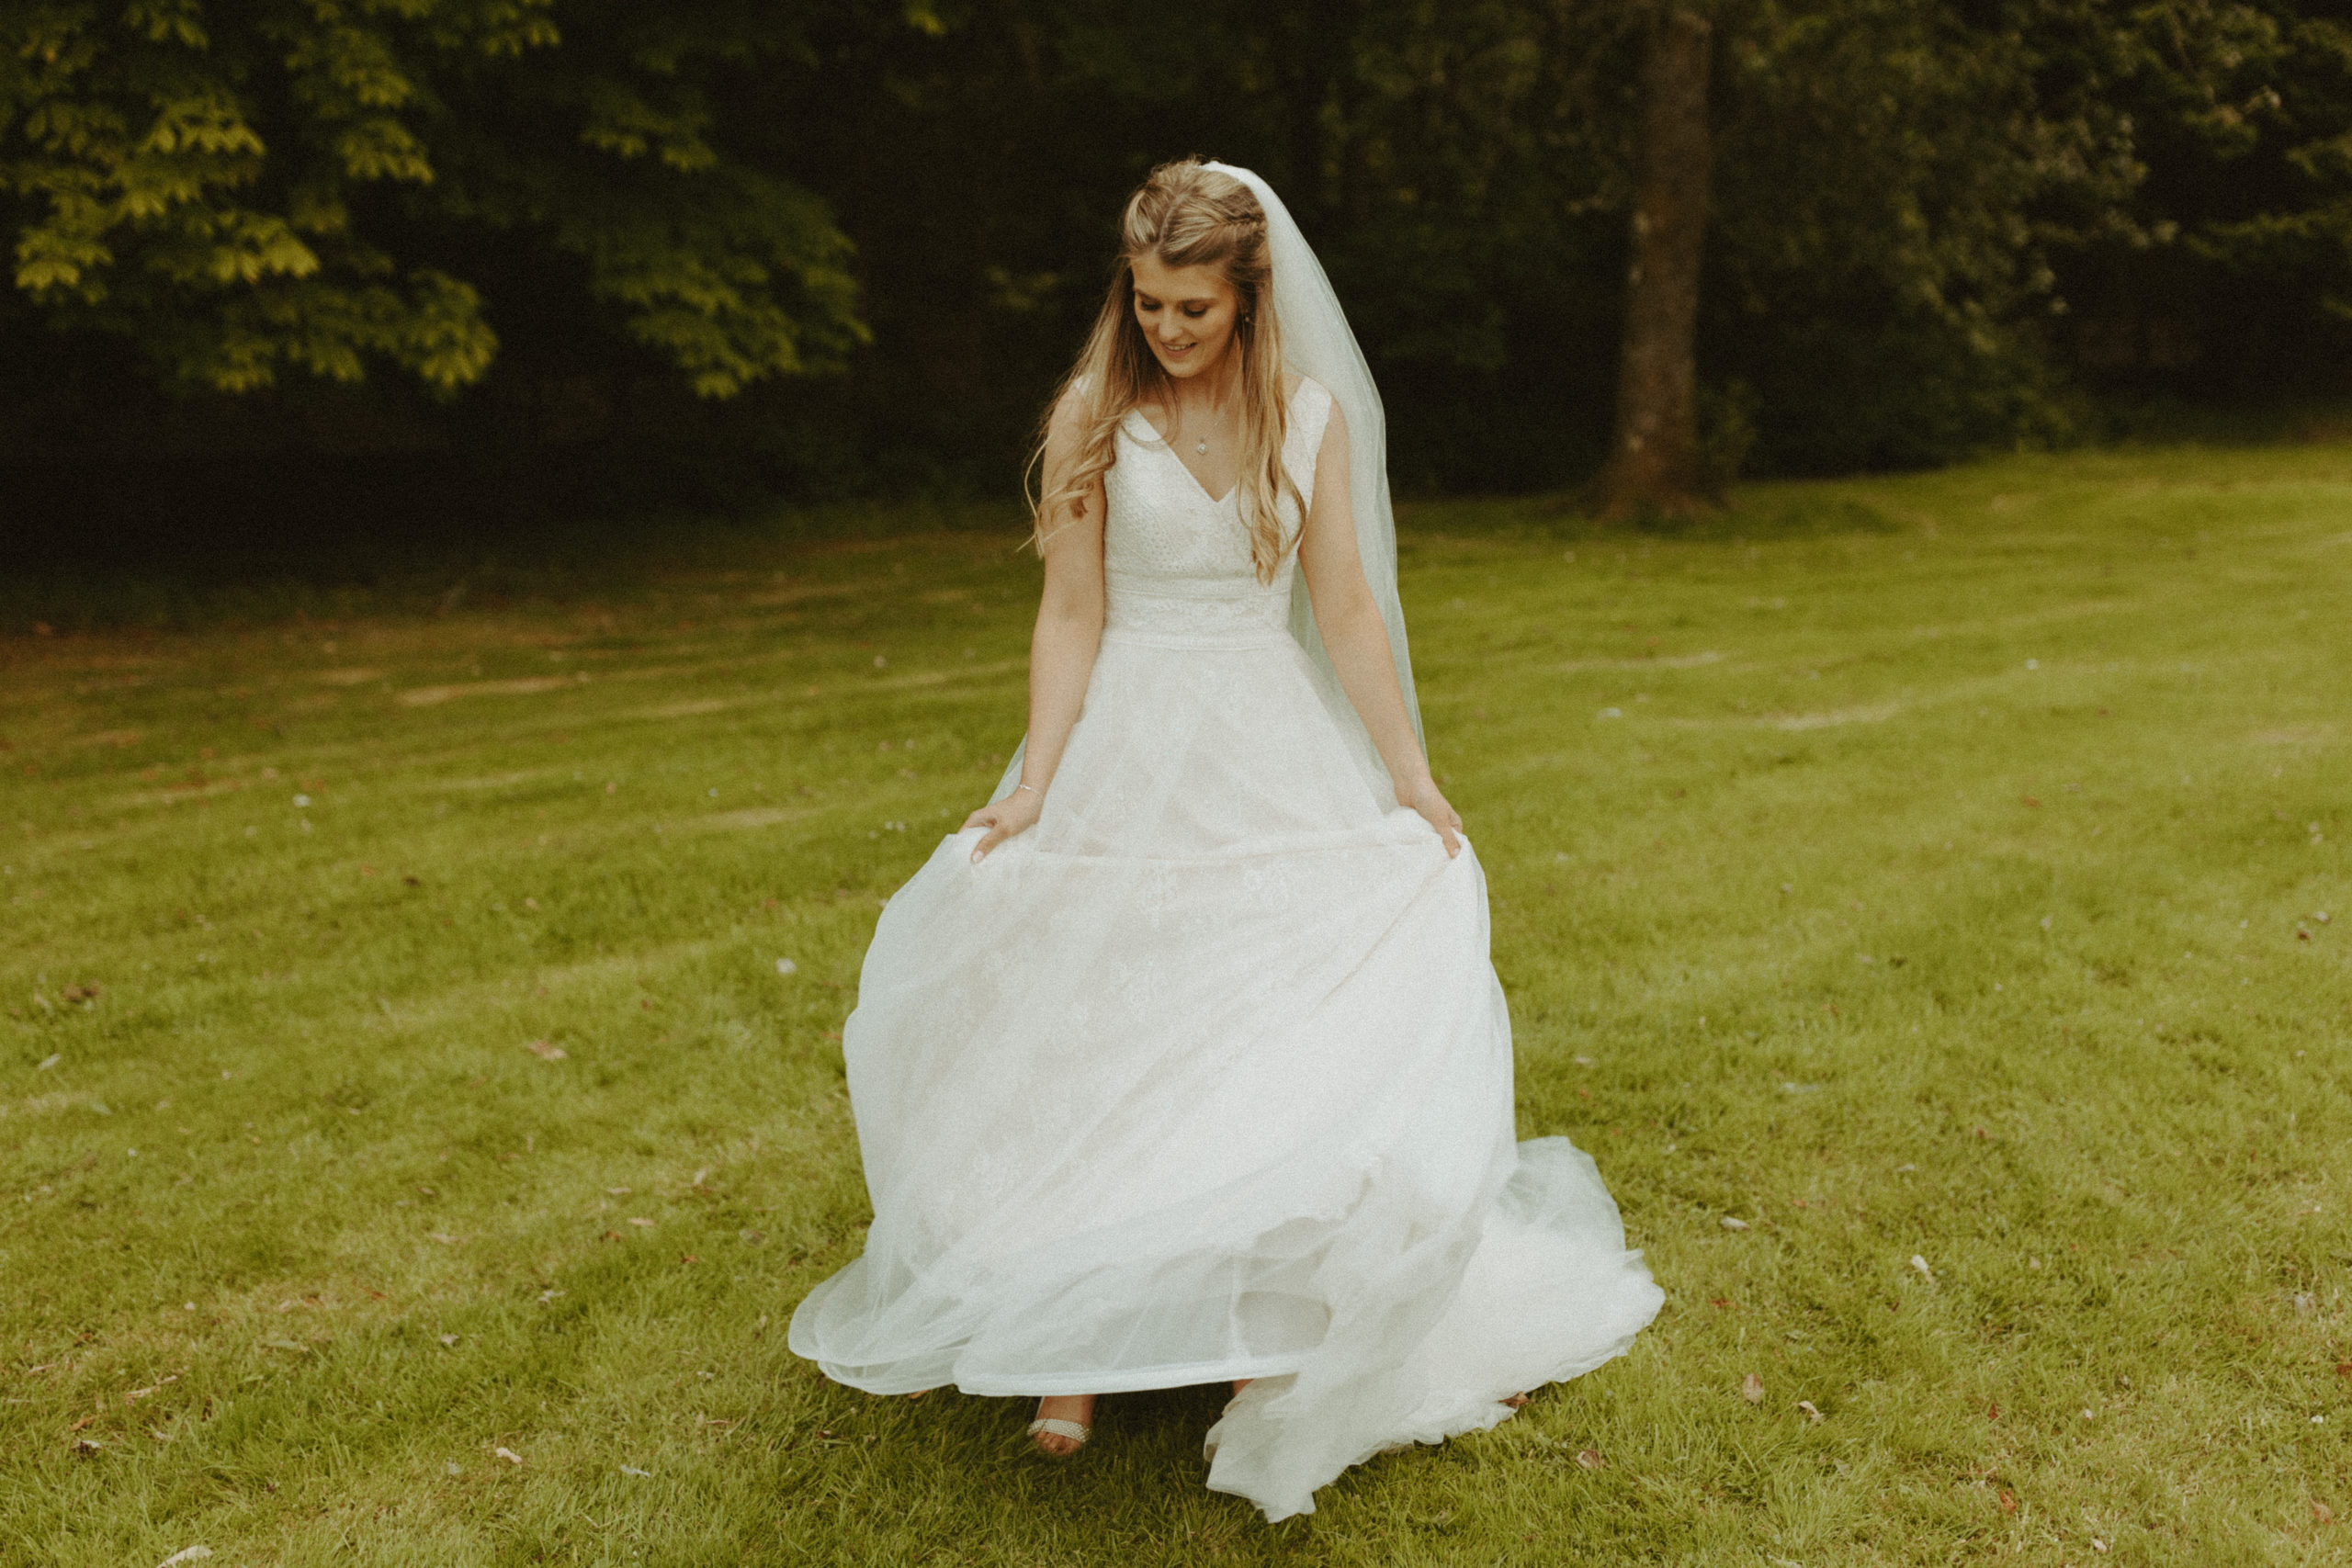 the bride twirling her wedding dress